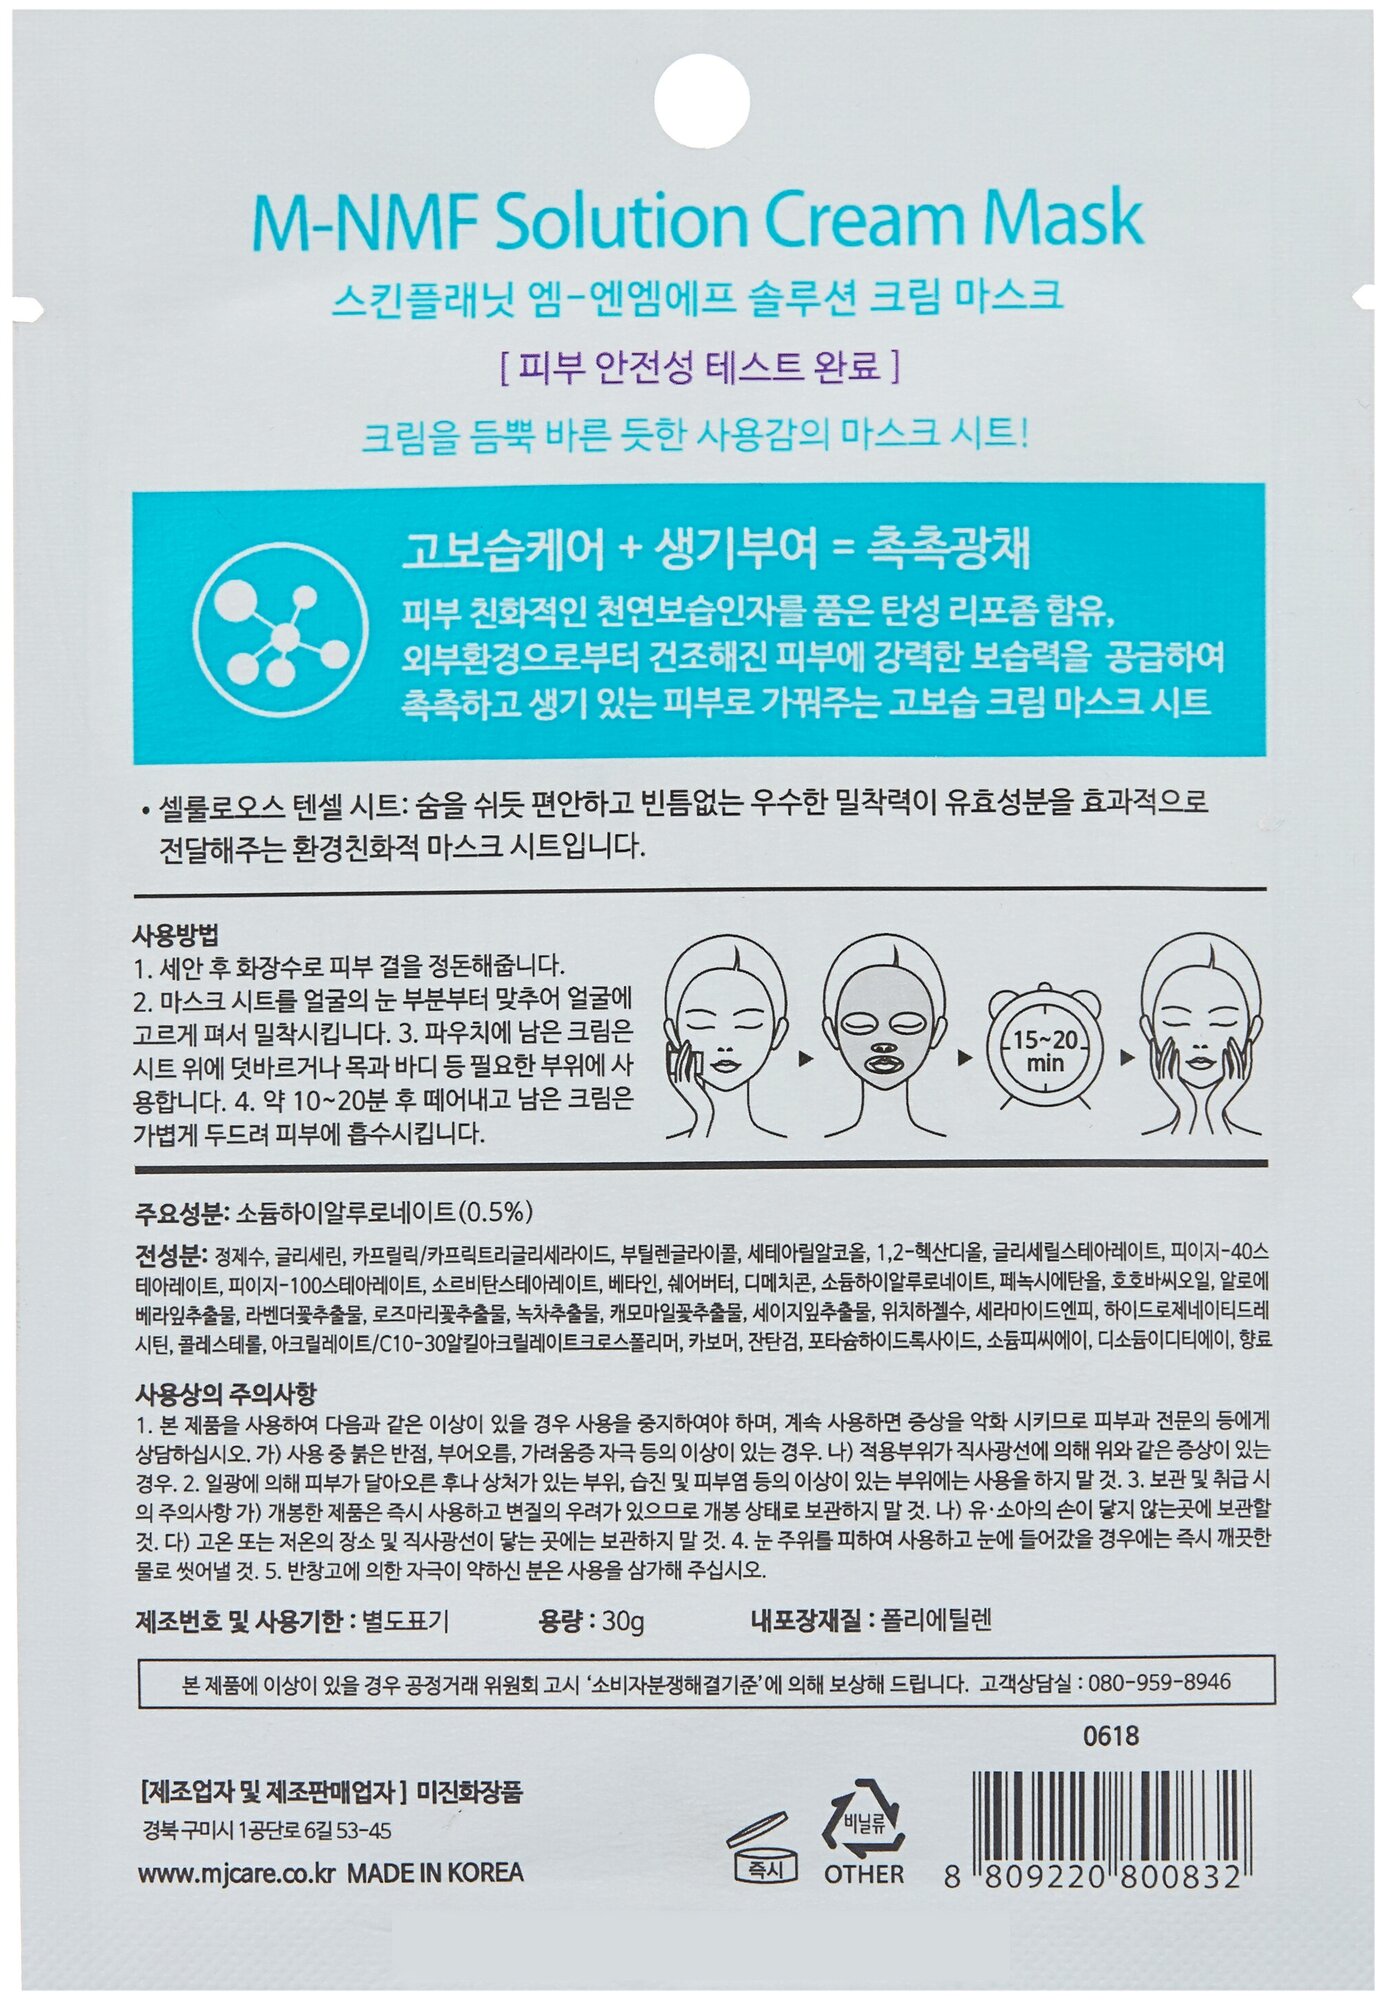 Тканевая маска для лица Mijin Skin Planet M-MNF Solution Cream Mask увлажняющая, 30 гр.